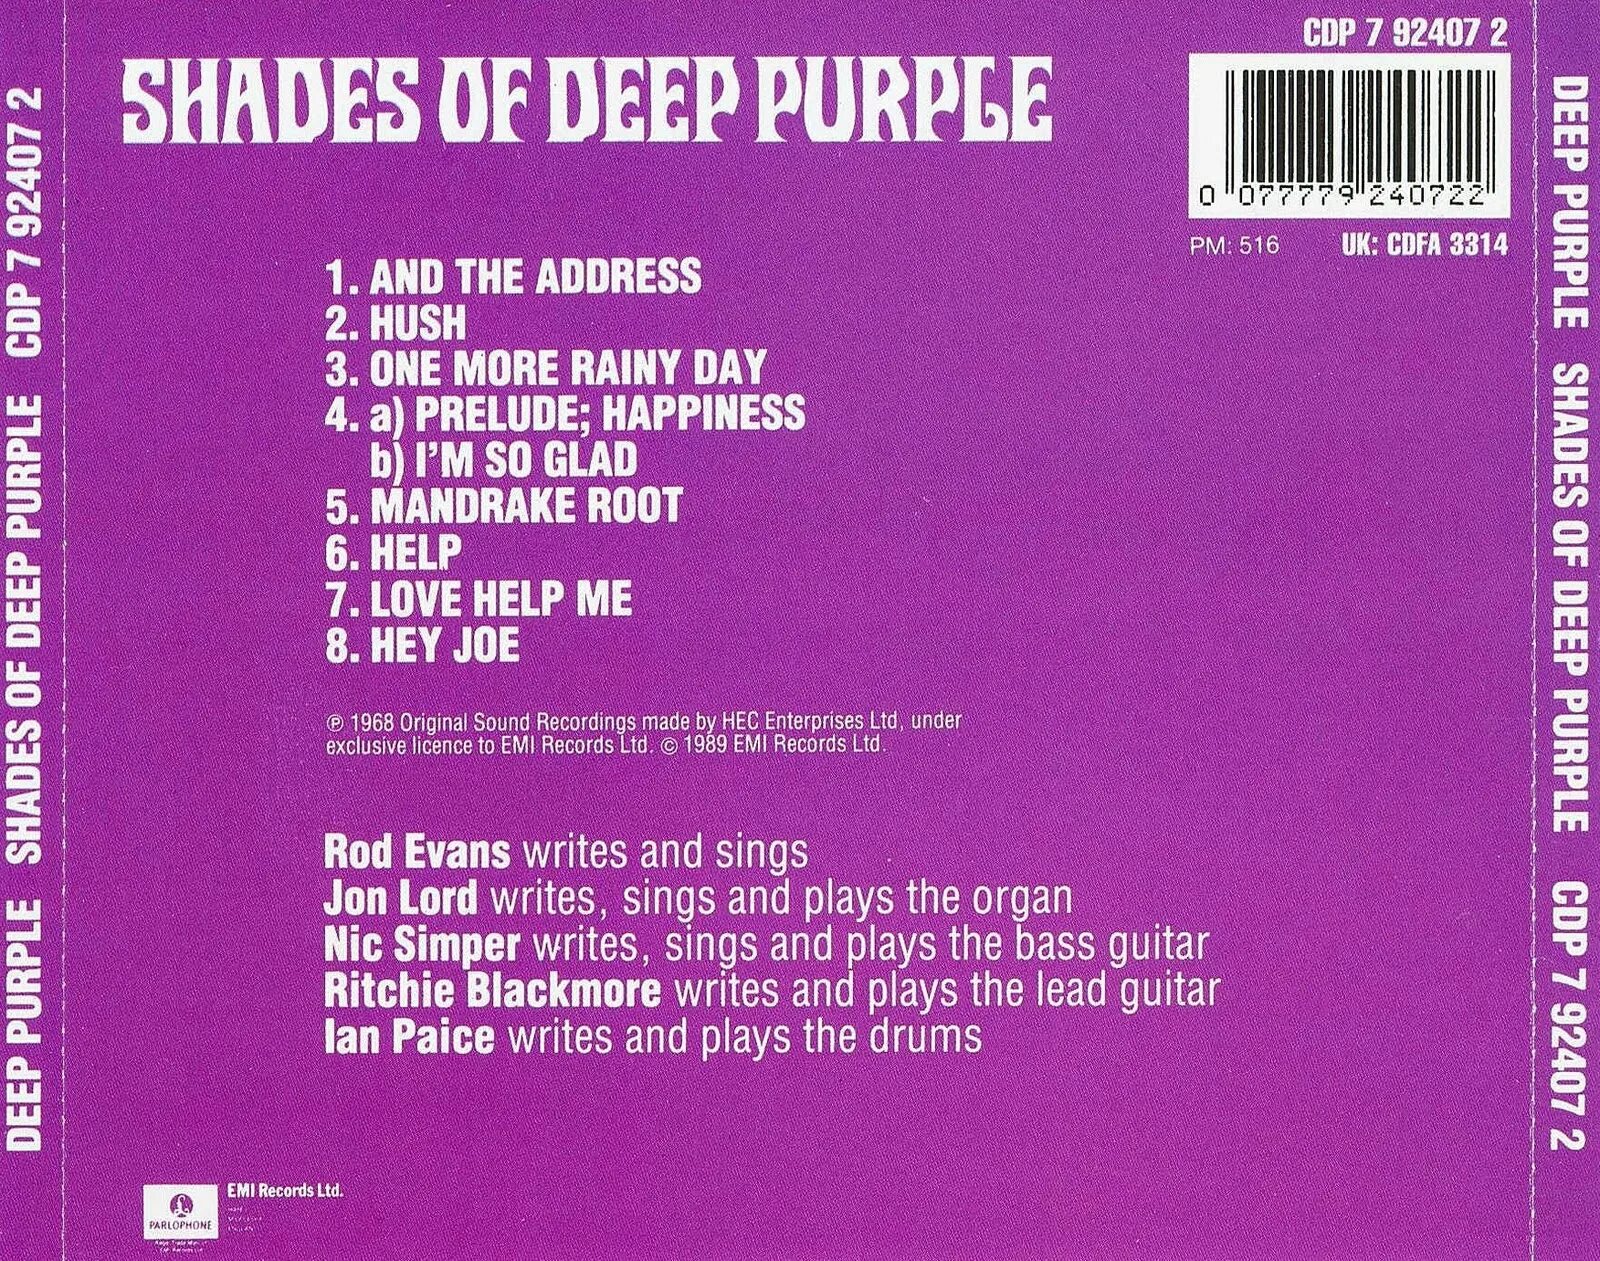 Deep Purple Deep Purple 1969 обложка. Группа Deep Purple альбомы 1968. Deep Purple Shades of Deep Purple 1968. Deep Purple Shades of Deep Purple 1968 обложка. Музыка дип перпл